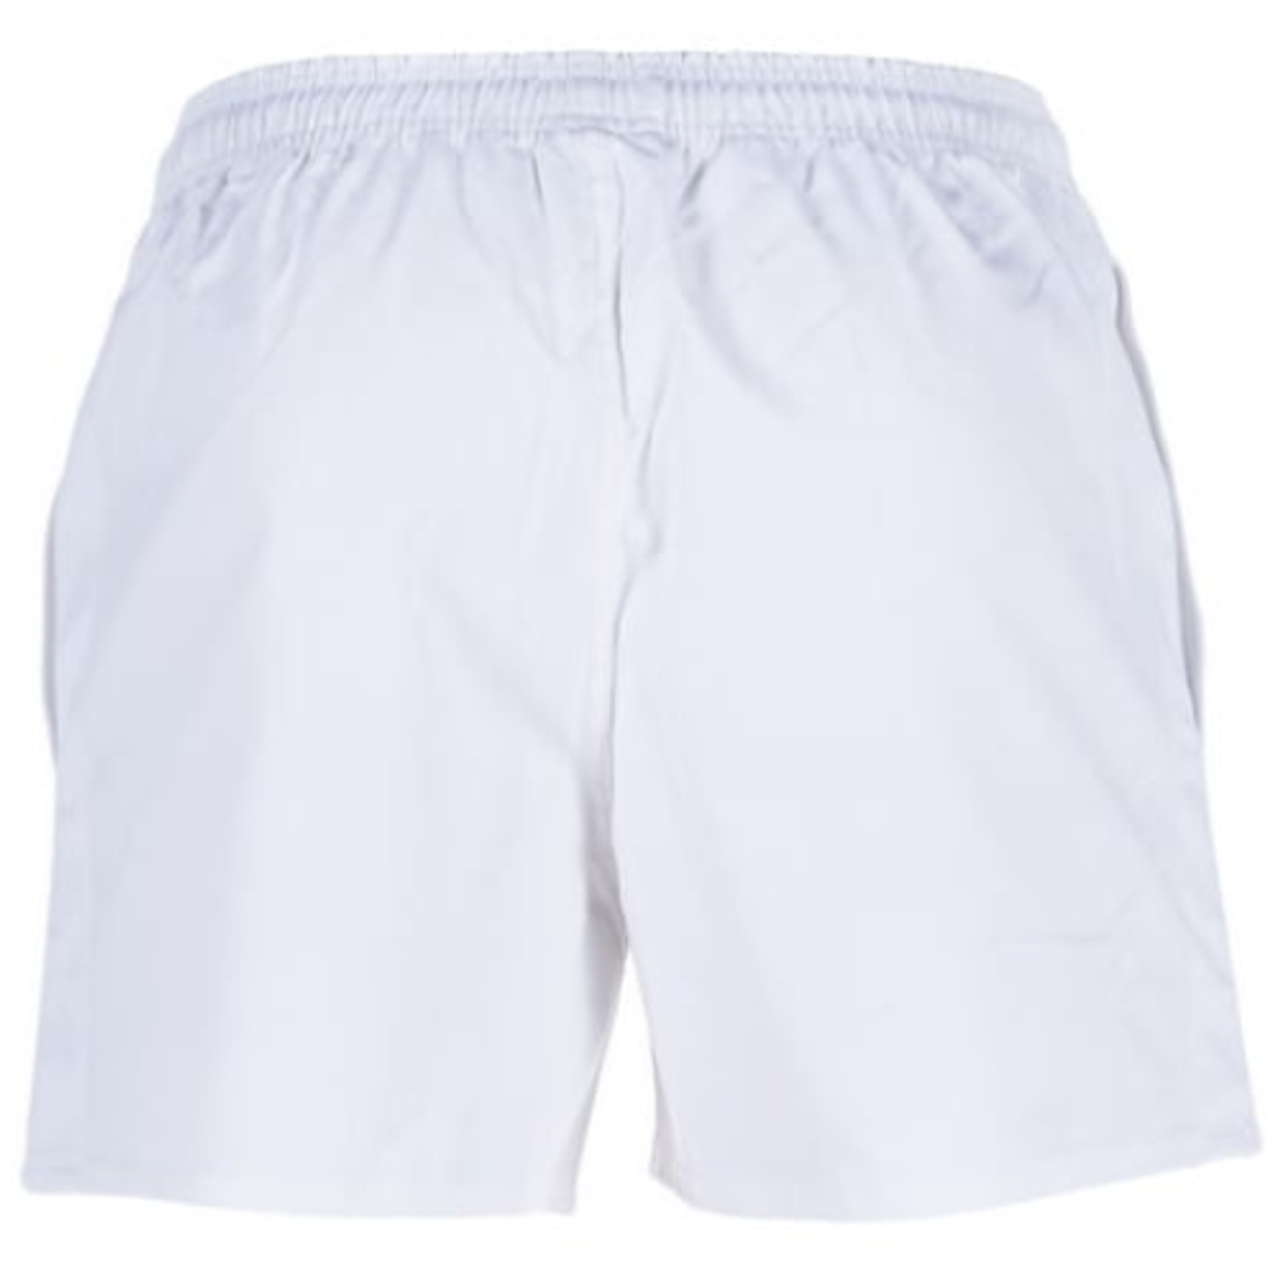 CCC Professional Shorts, White